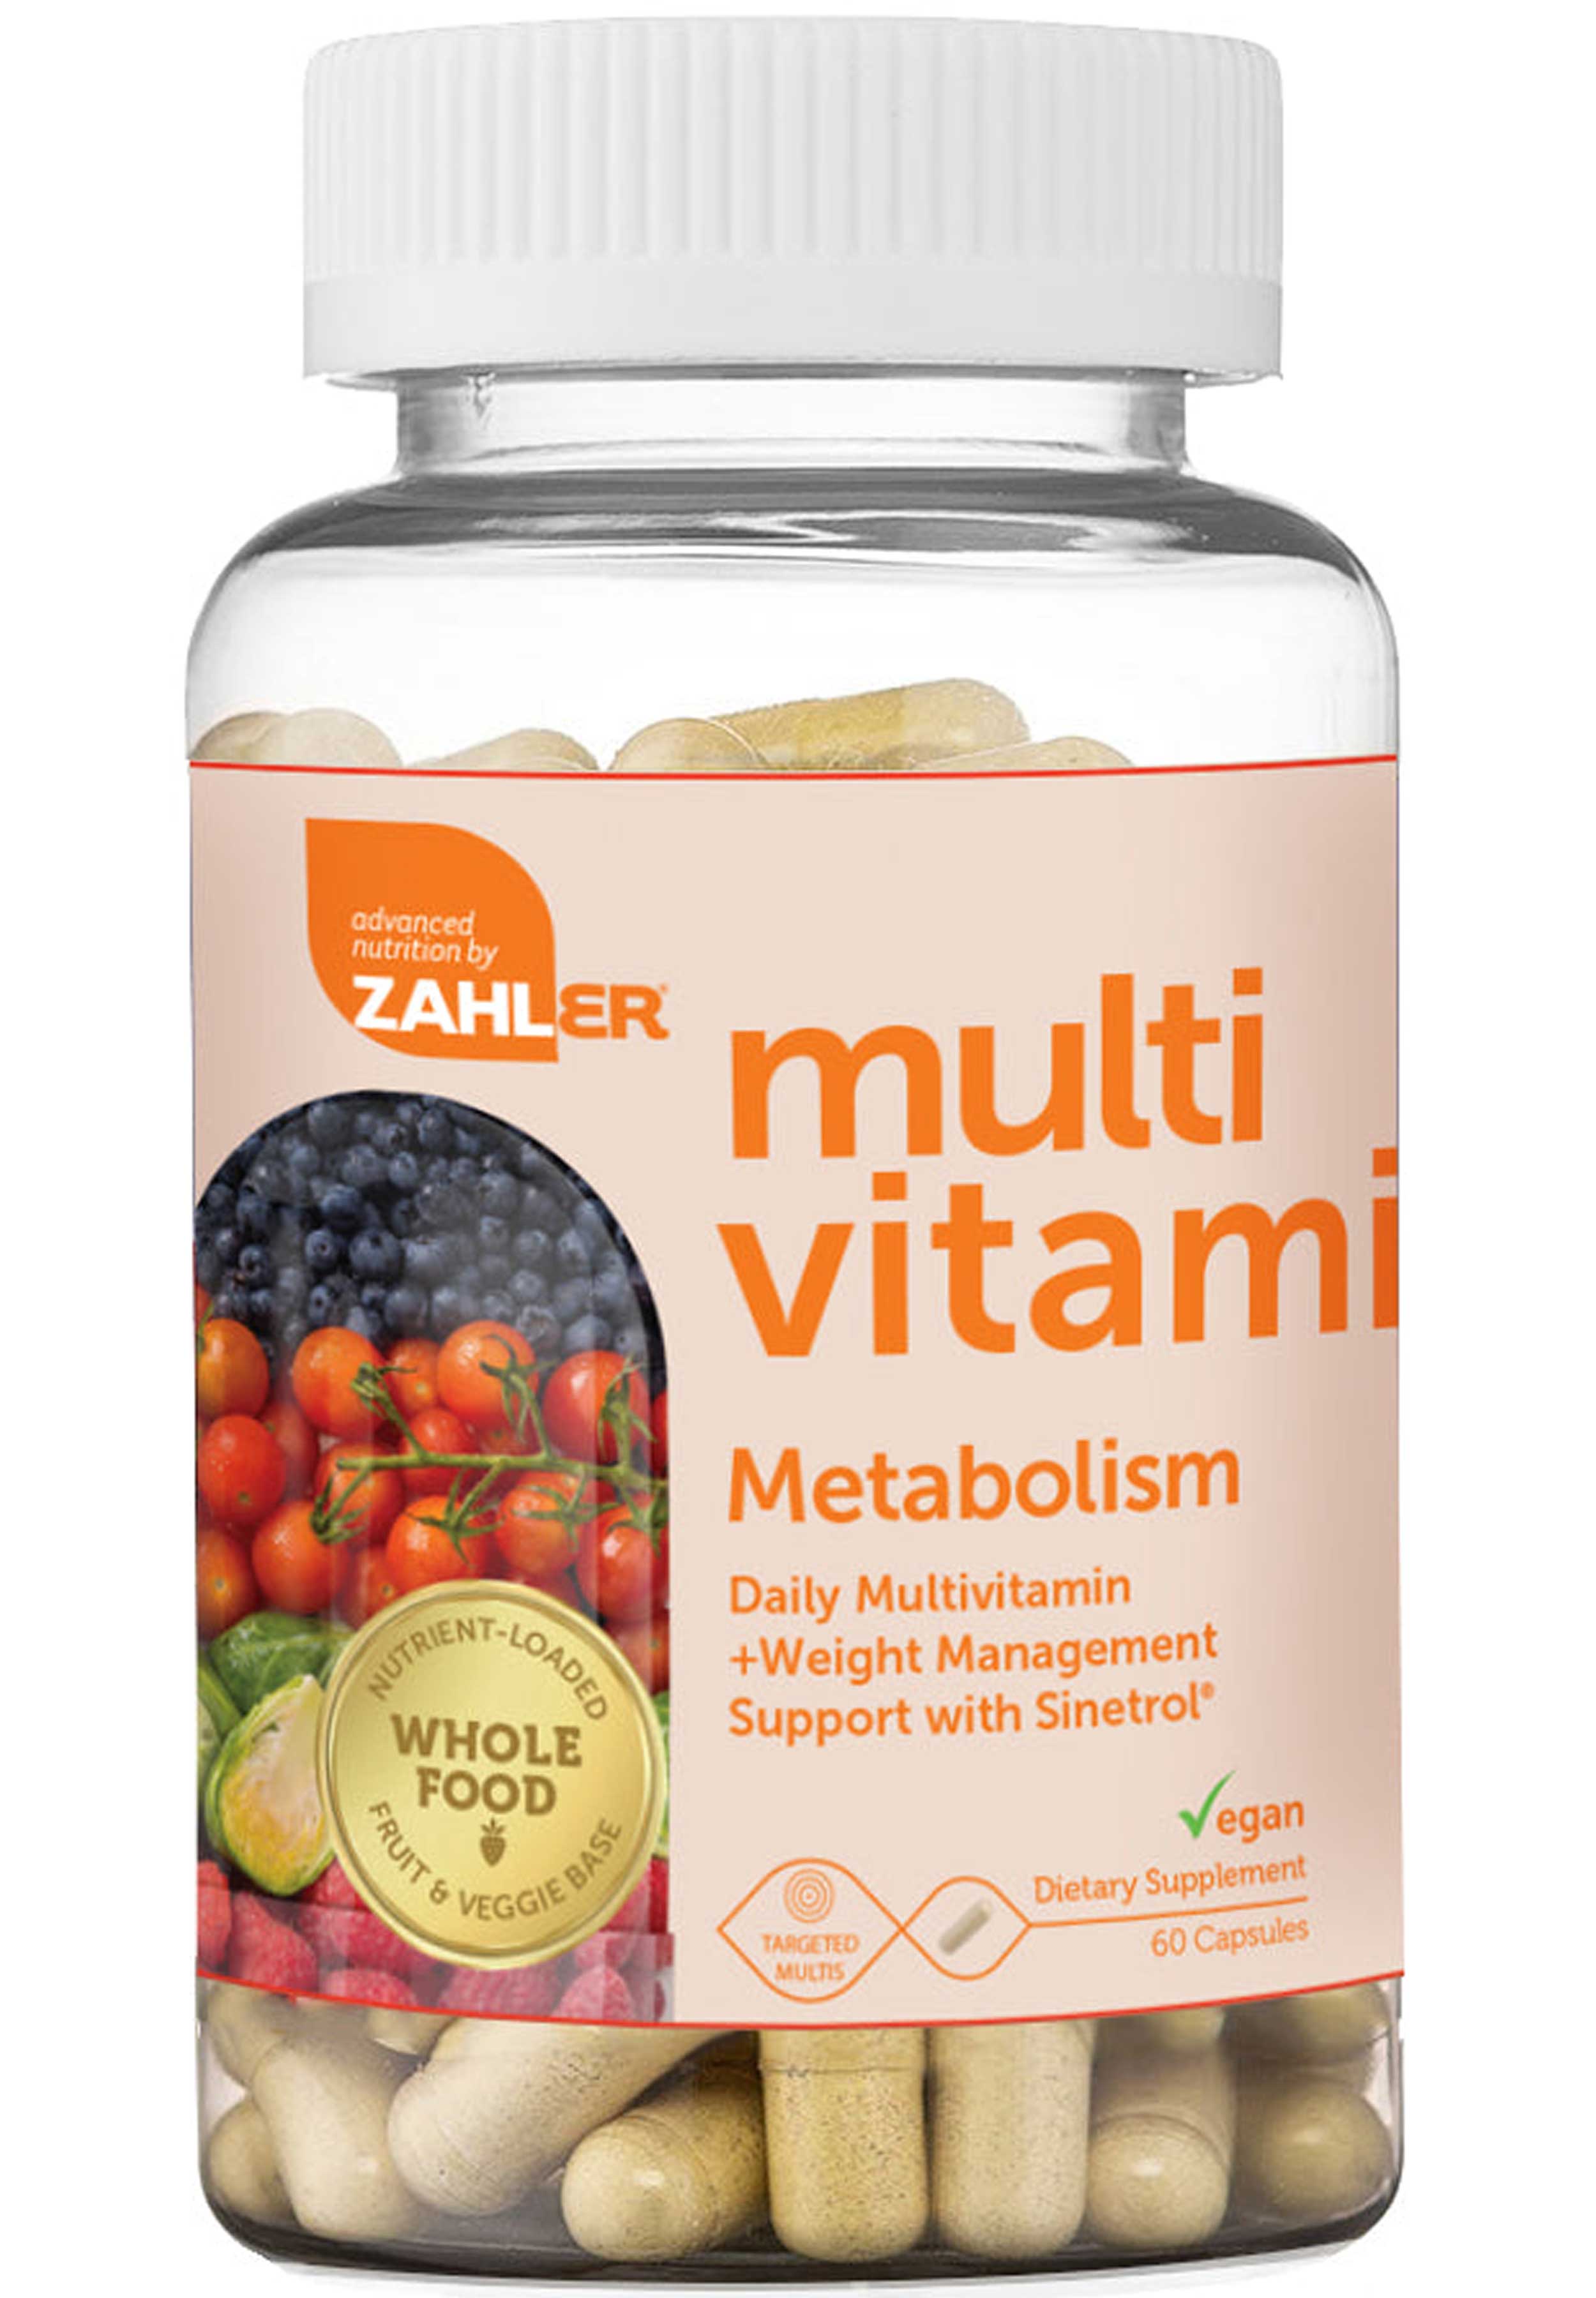 Advanced Nutrition By Zahler Multivitamin Metabolism